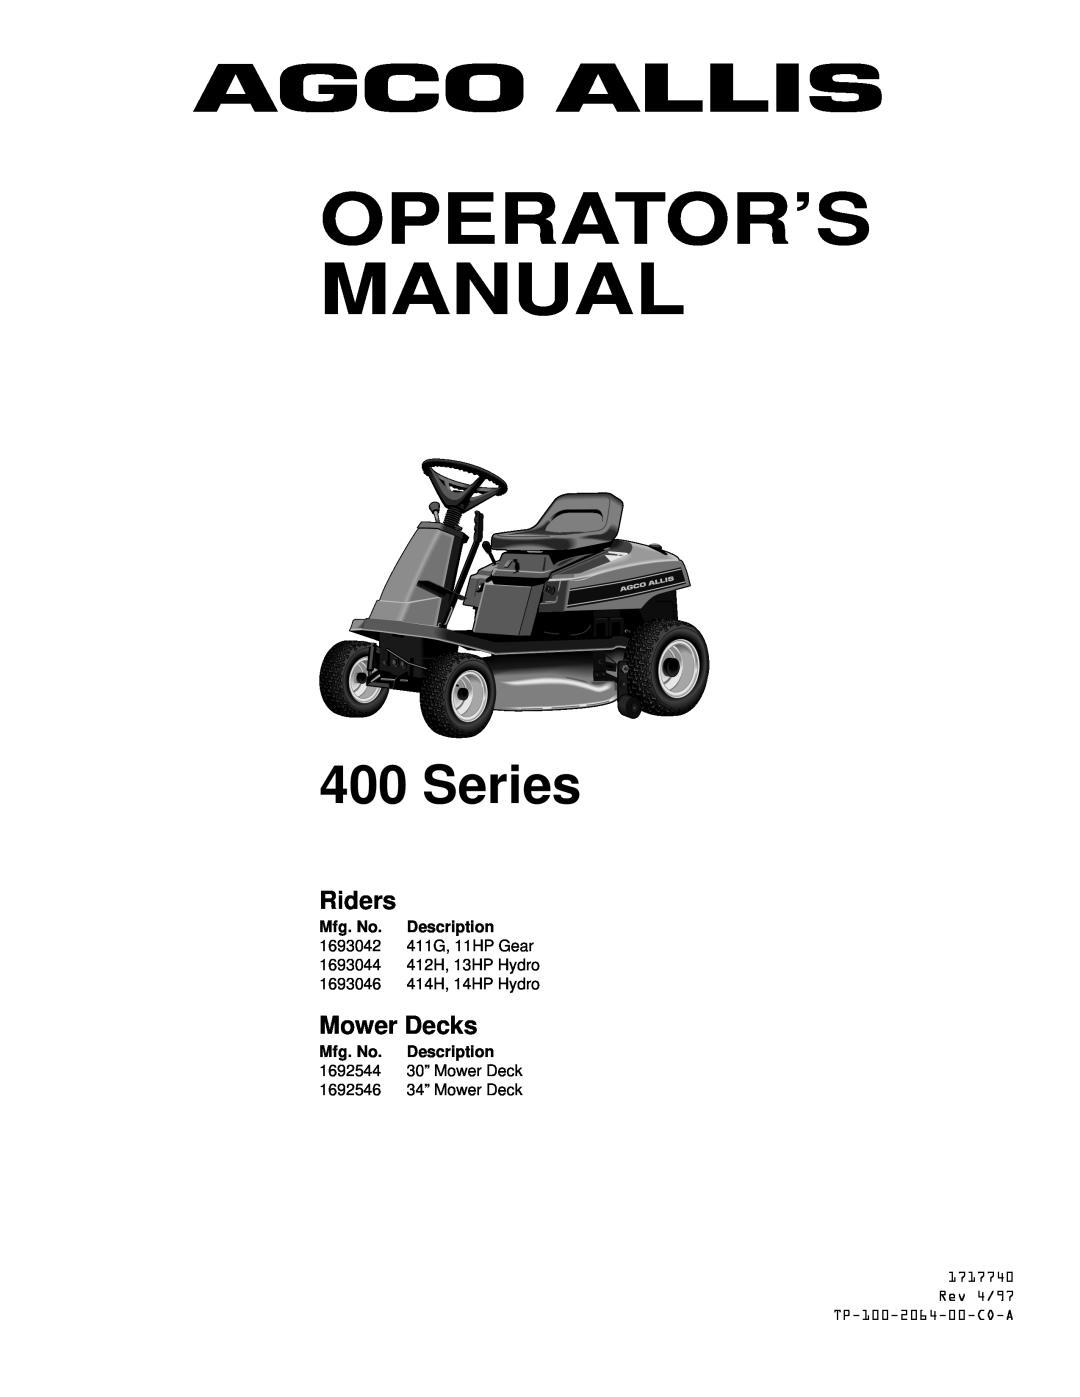 Simplicity 11HP, 14HP manual Series, Riders, Mower Decks, Operator’S Manual, Rev 4/97 TP-100-2064-00-CO-A 